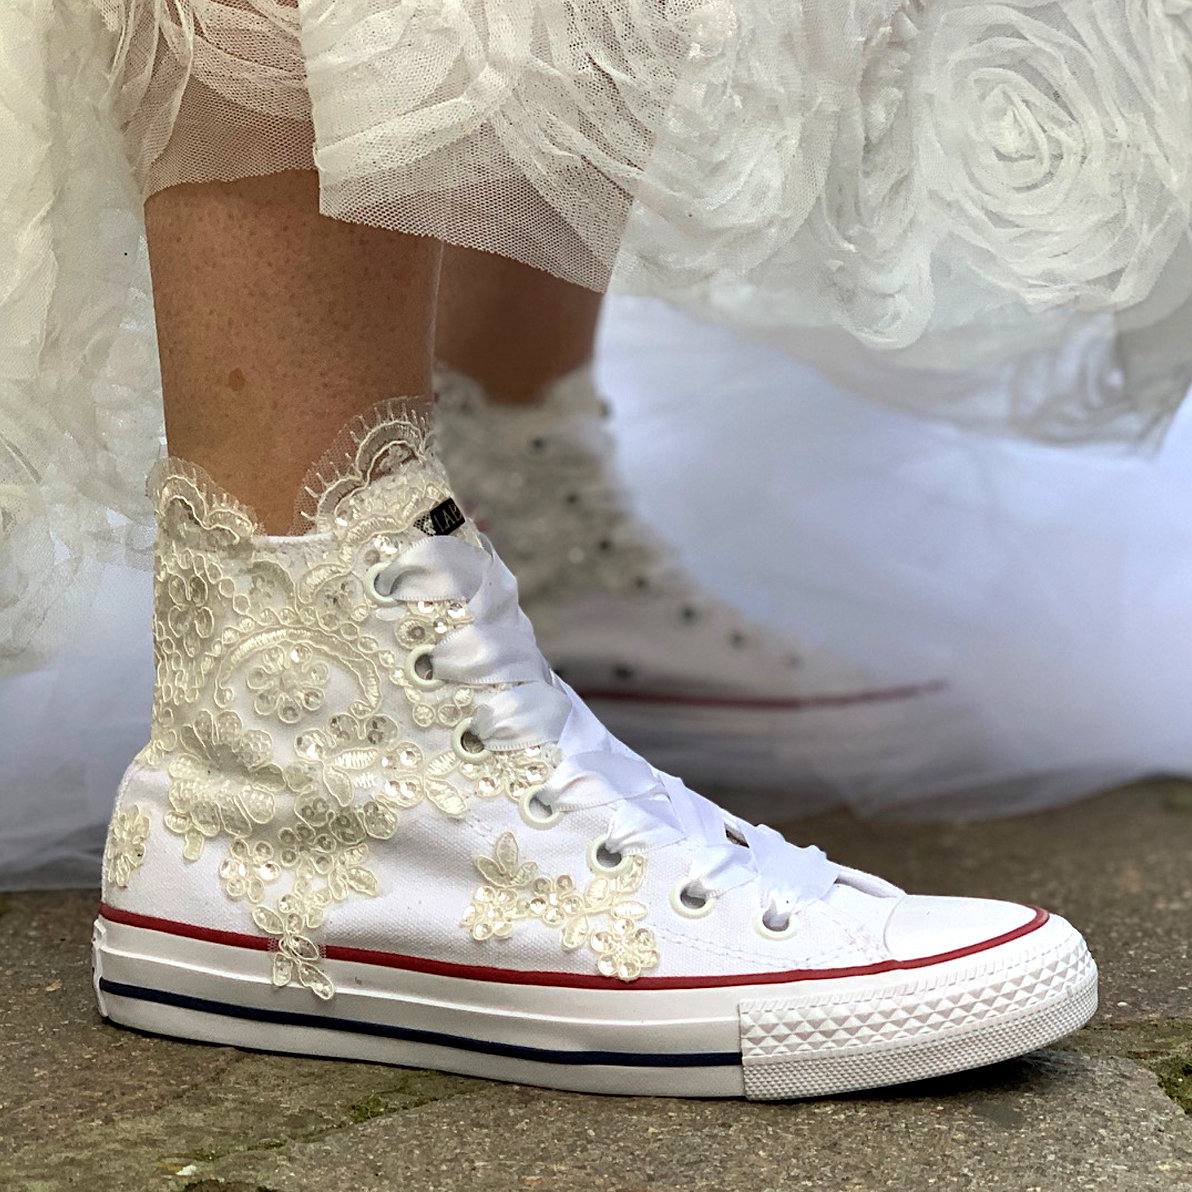 Scarpe Calzature uomo Scarpe da ginnastica Scarpe da ginnastica alte Scarpe personalizzate wedding bride to be 